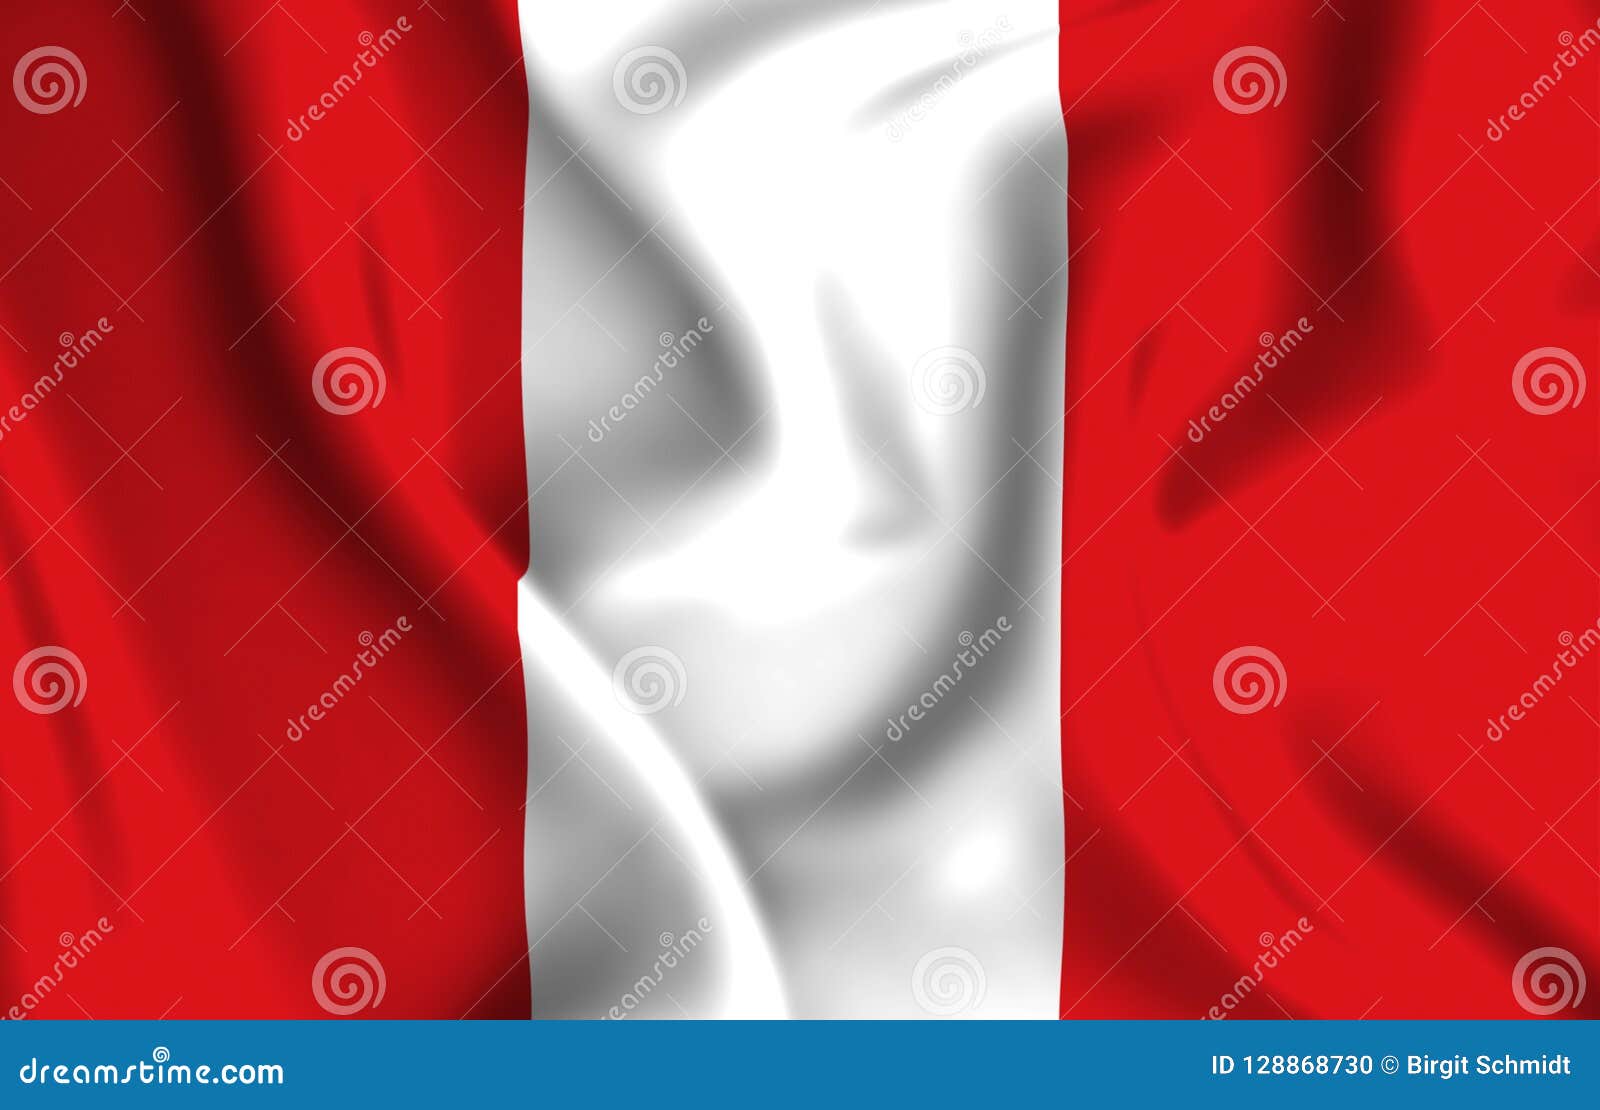 Peru flag illustration stock illustration. Illustration of state ...